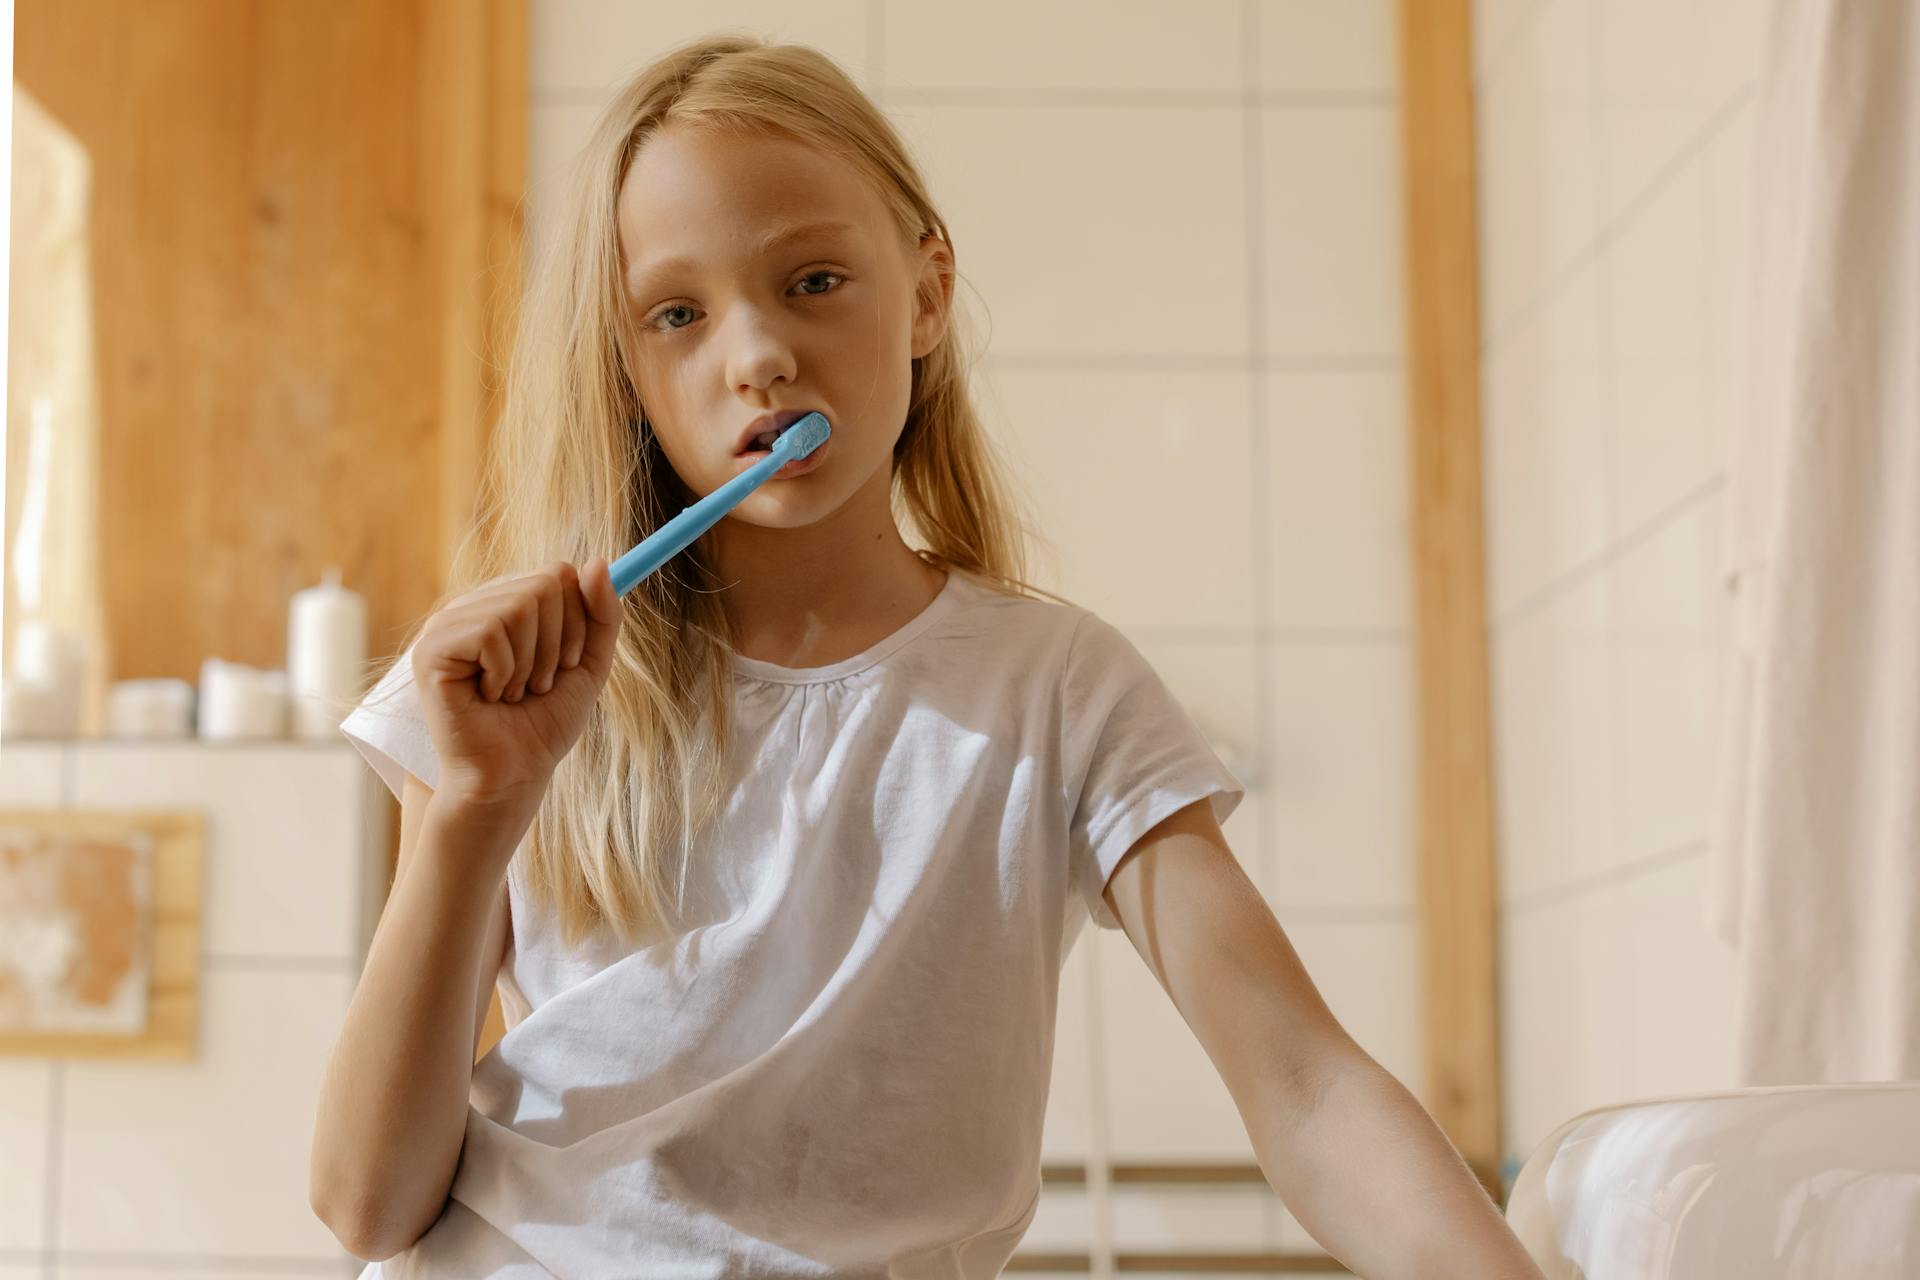 A little girl brushing her teeth | Source: Pexels